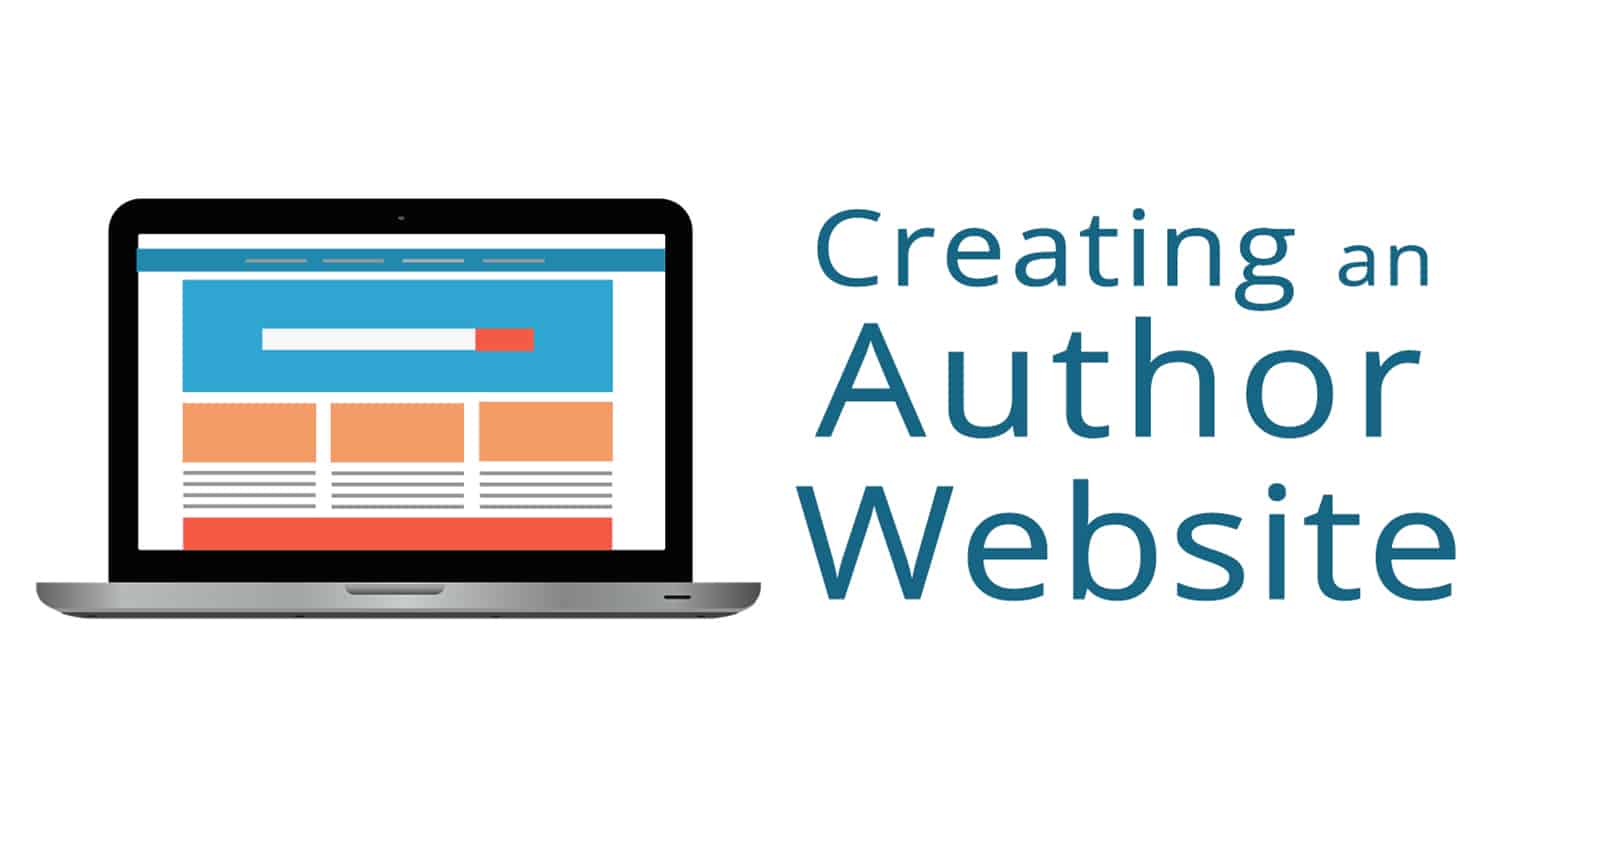 Creating an Author Website